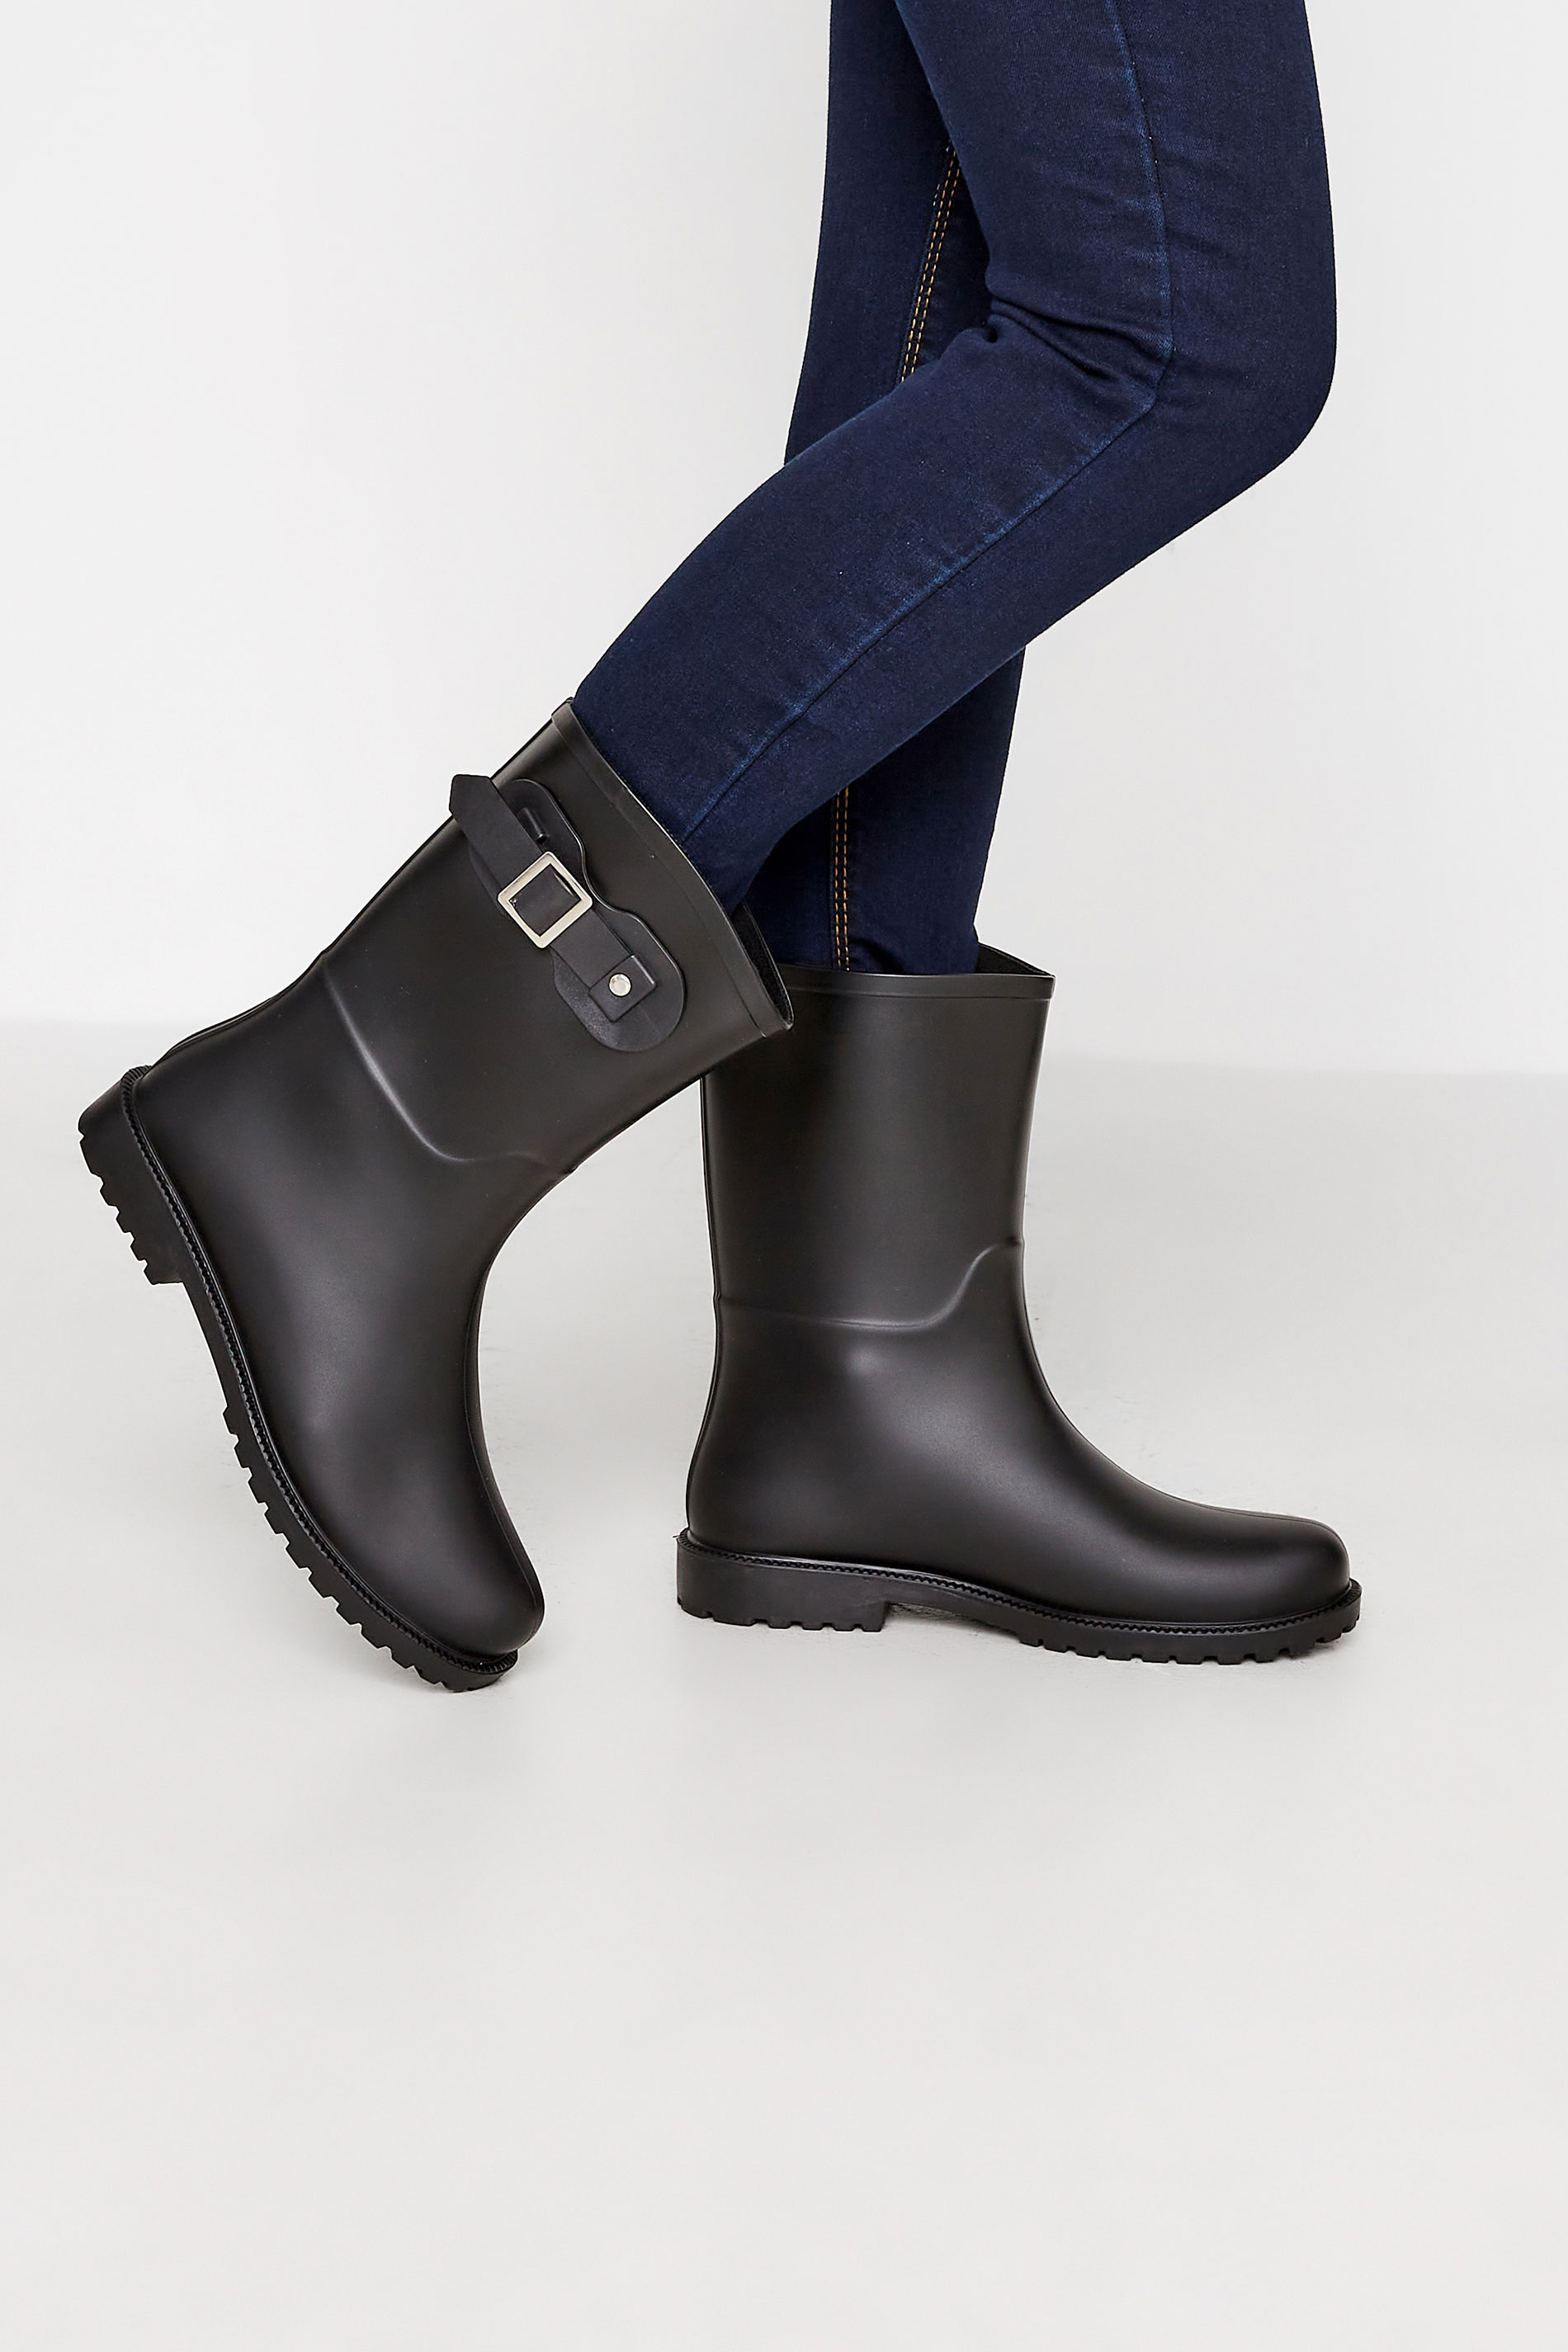 PixieGirl Black Buckle Welly Boots In Standard Fit | PixieGirl 1